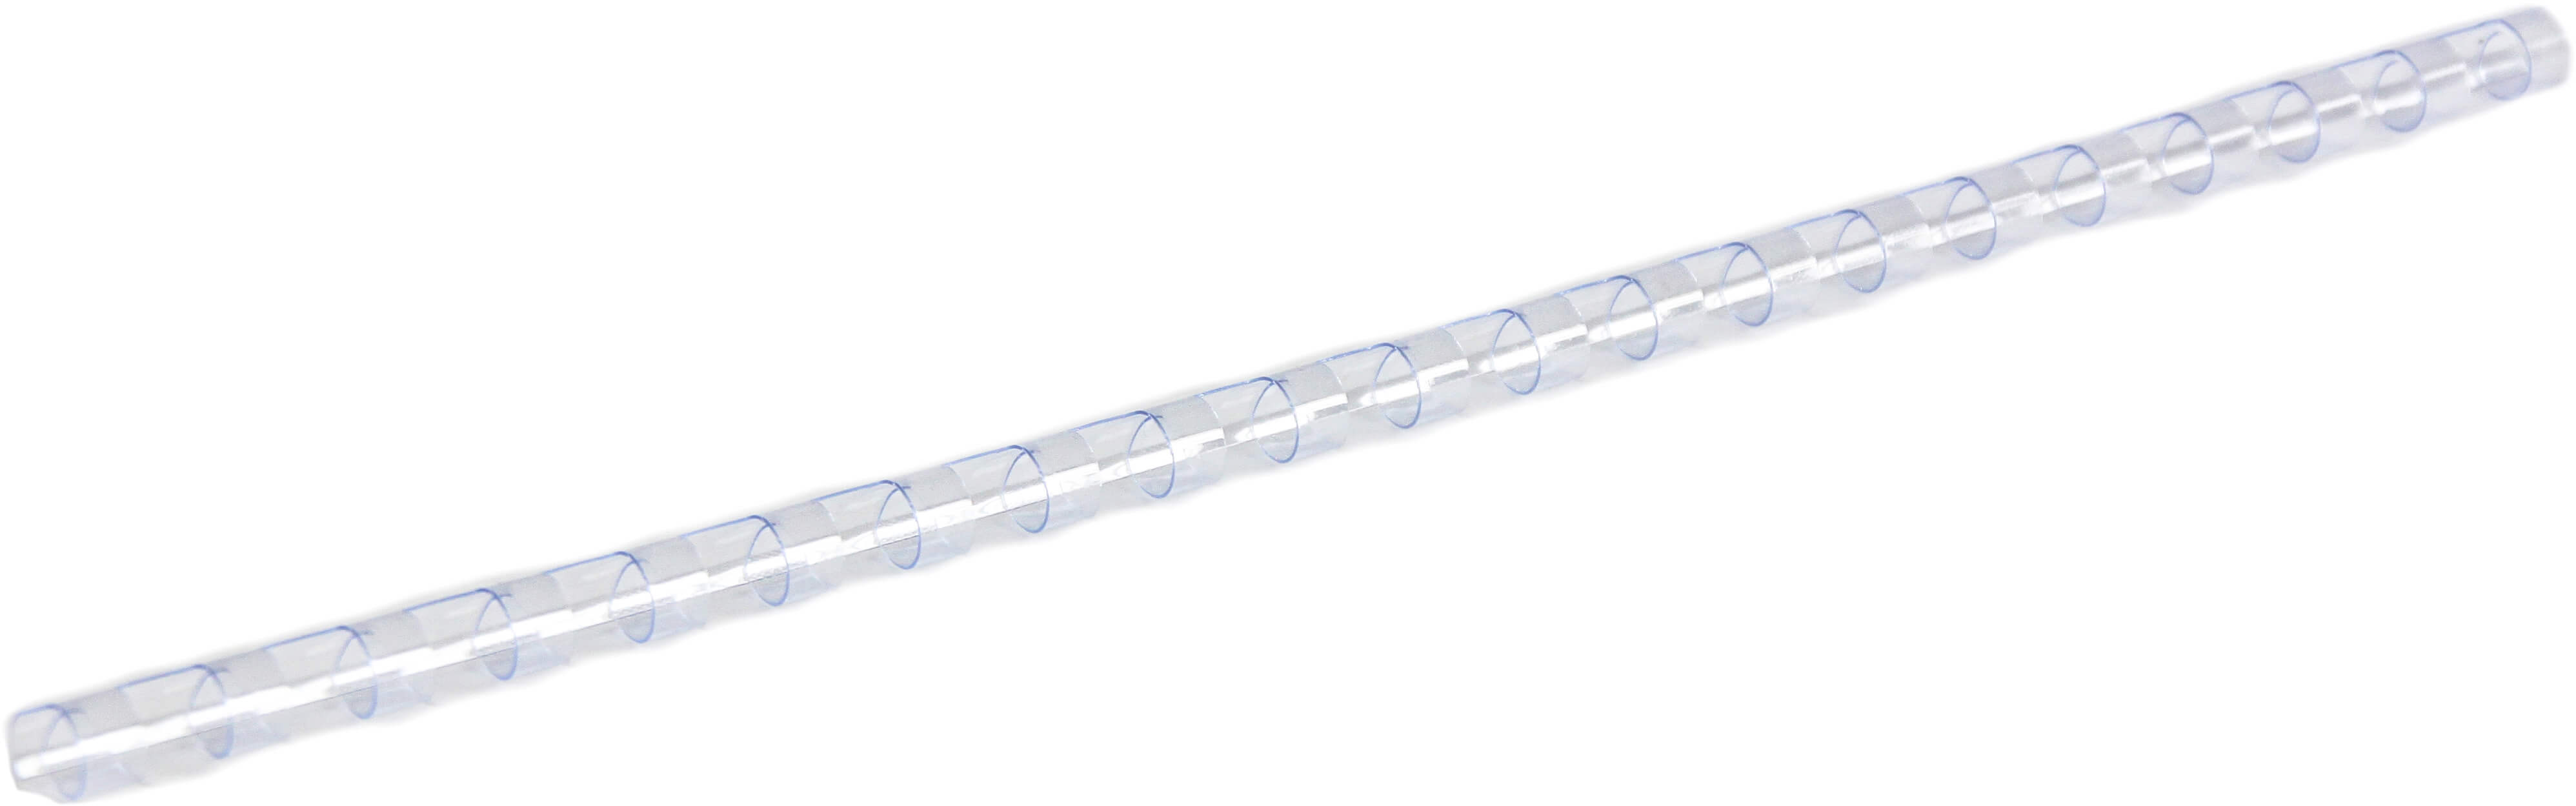 Plastikbinderücken 21 Ringe 8mm transparent (100 Stück)